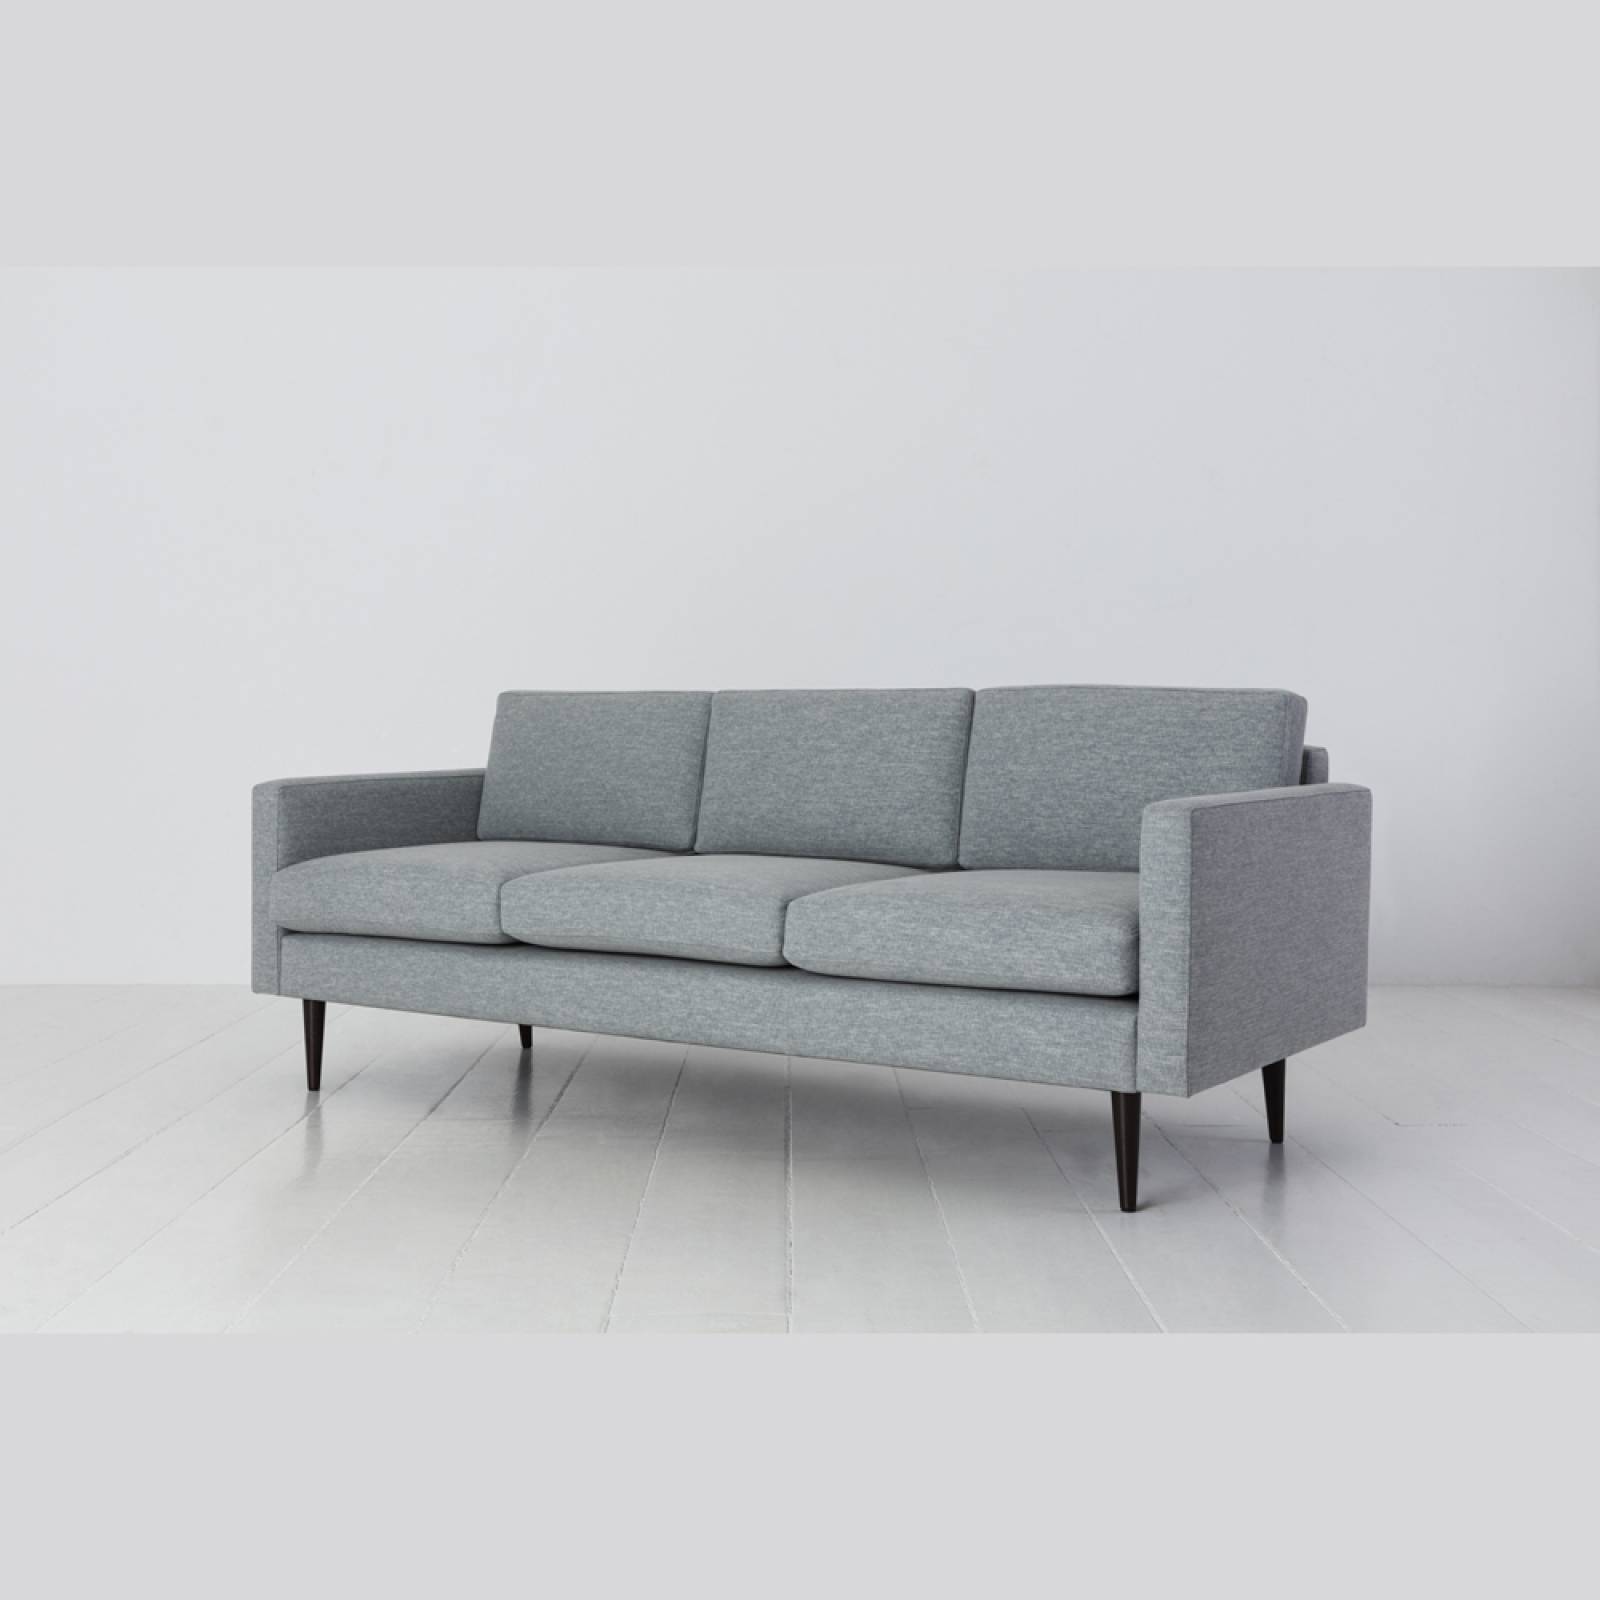 Swyft - Model 01 - 3 Seater Sofa - Linen Seaglass thumbnails